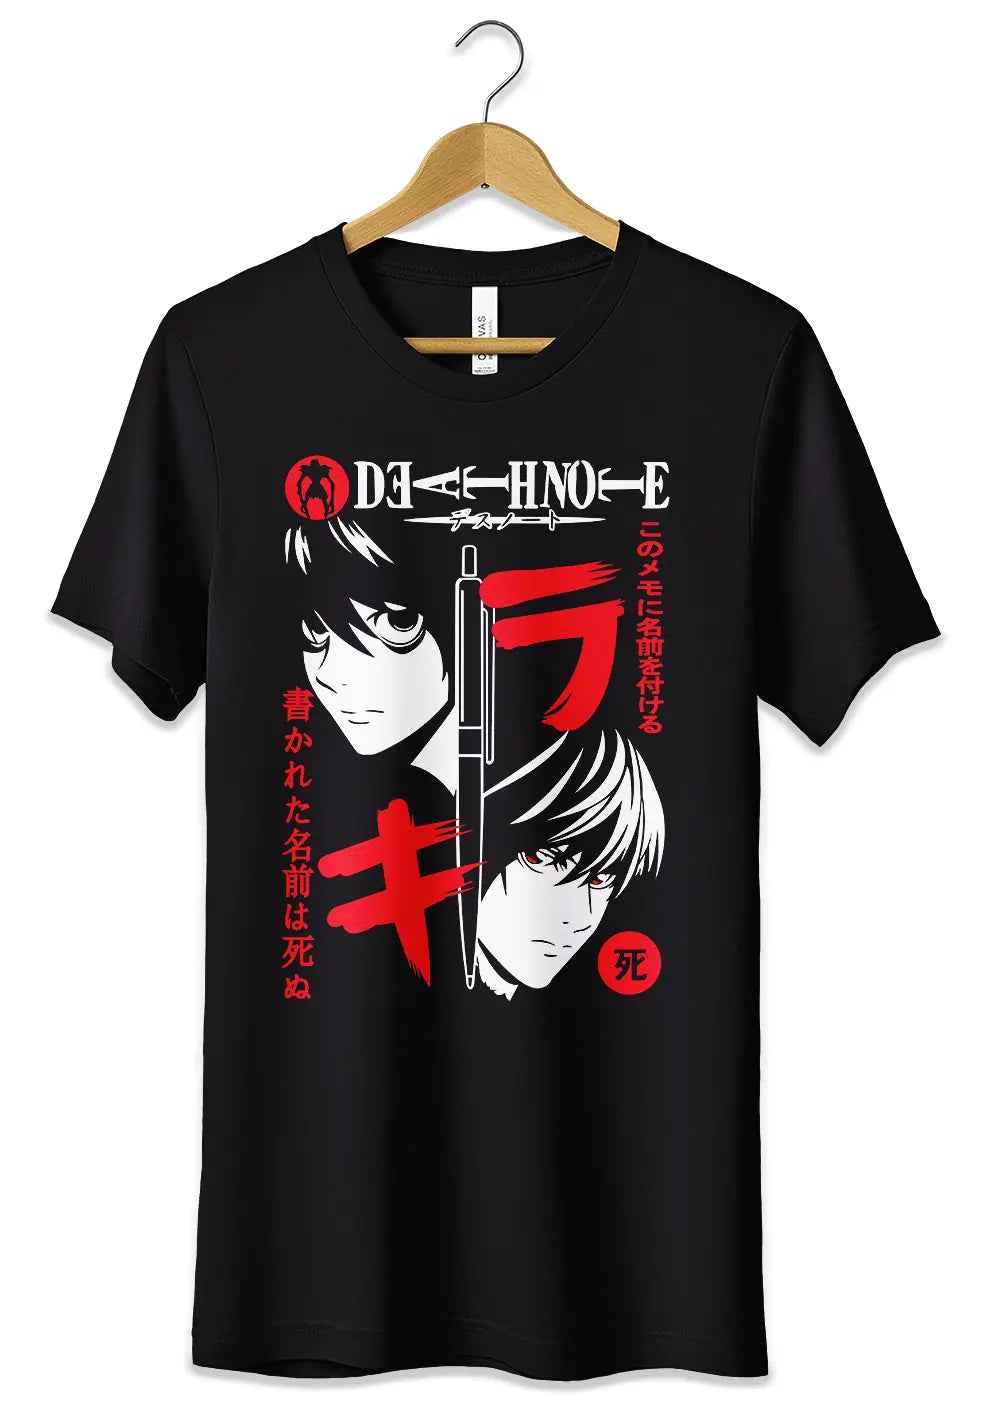 T-Shirt Maglietta Fans Death Note Anime, CmrDesignStore, T-Shirt, t-shirt-maglietta-fans-death-note-anime, CmrDesignStore